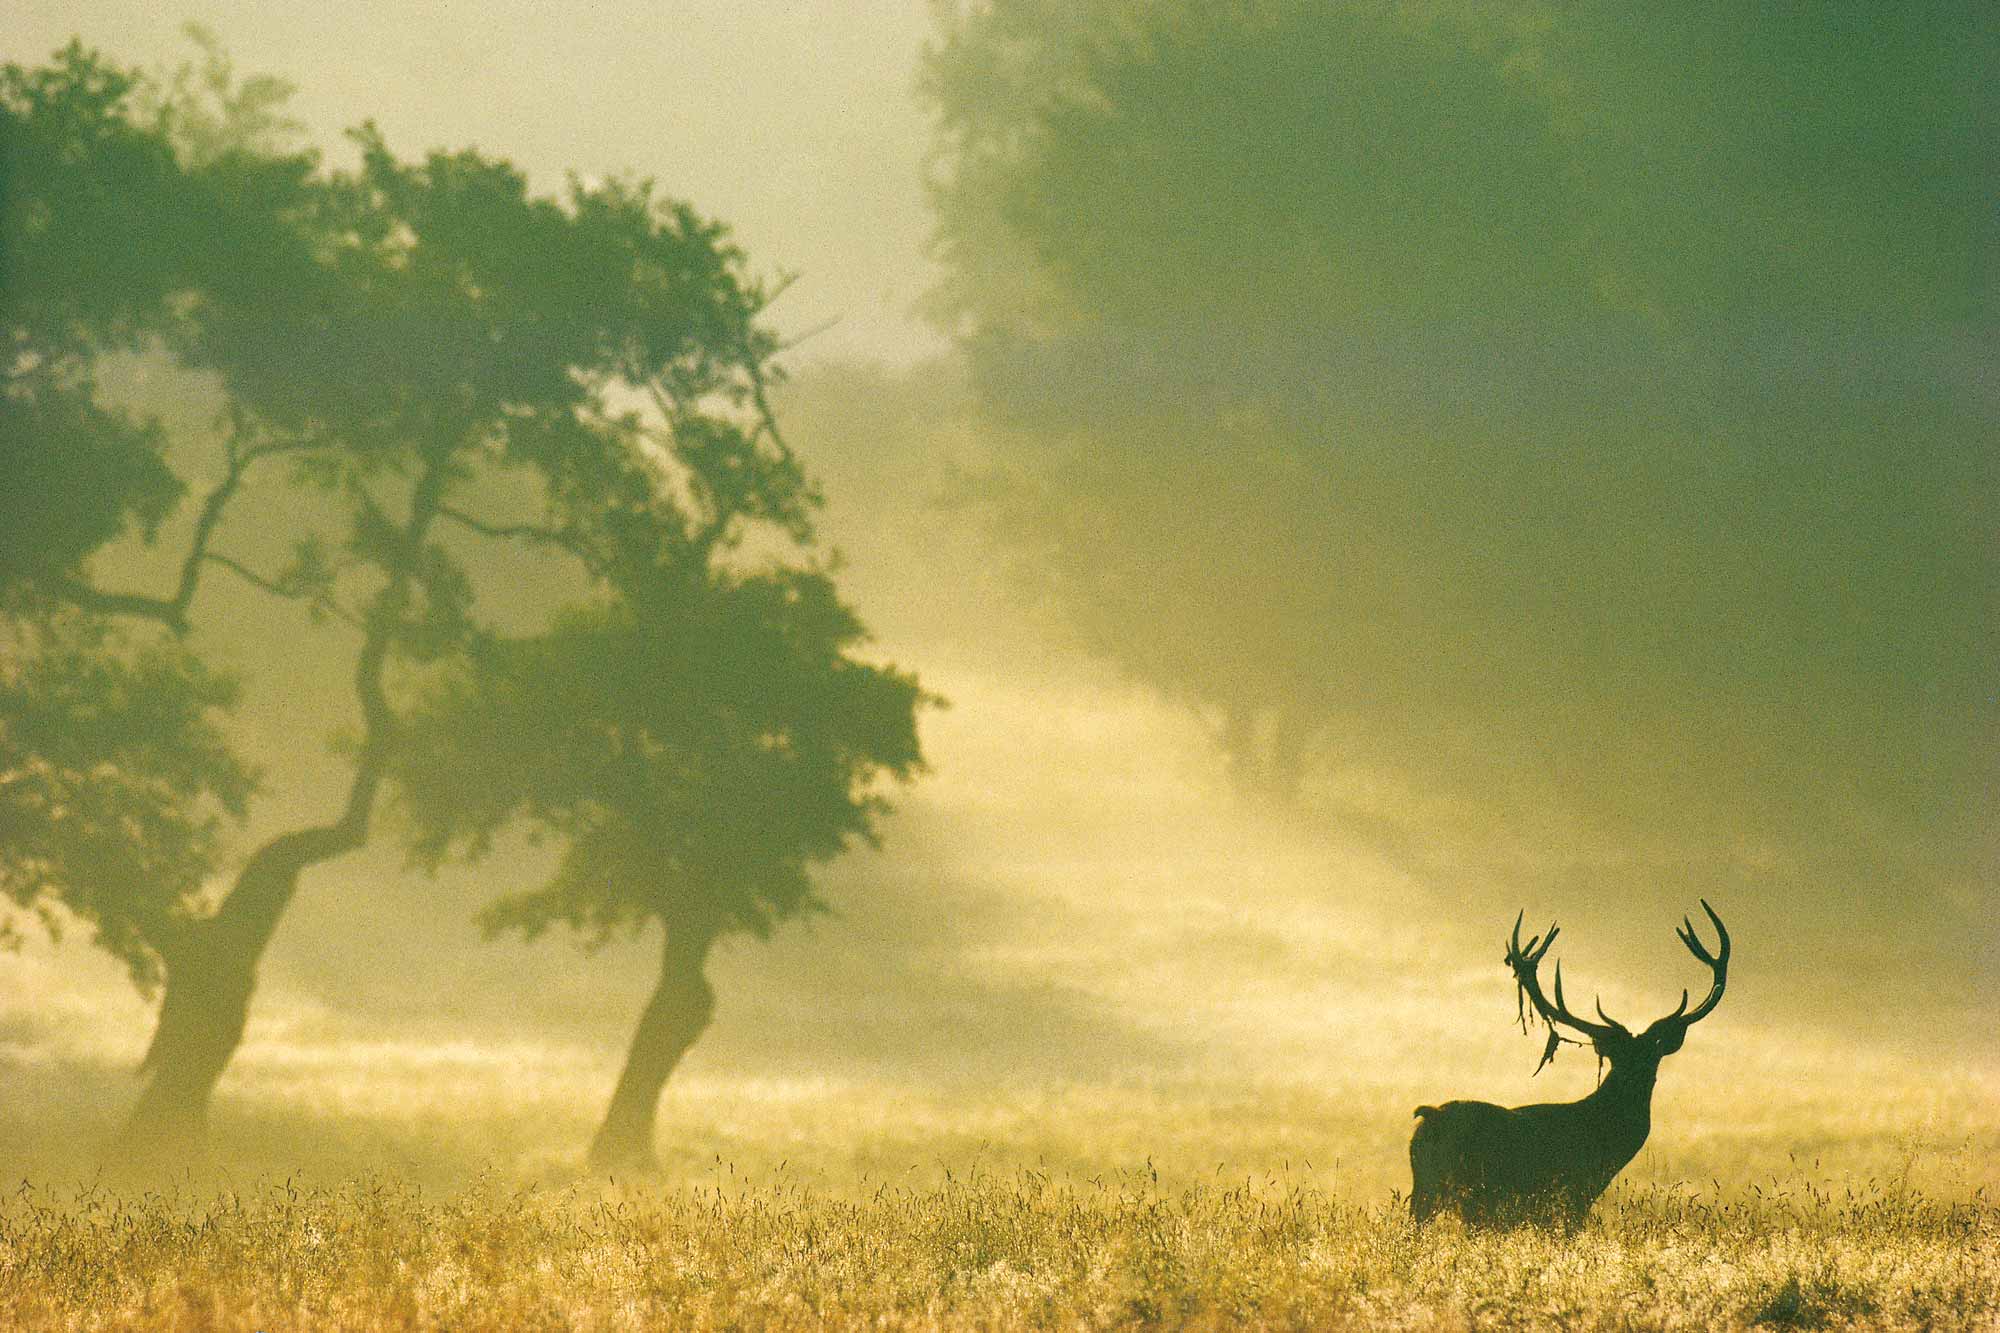 King of forests - Yann Arthus-Bertrand